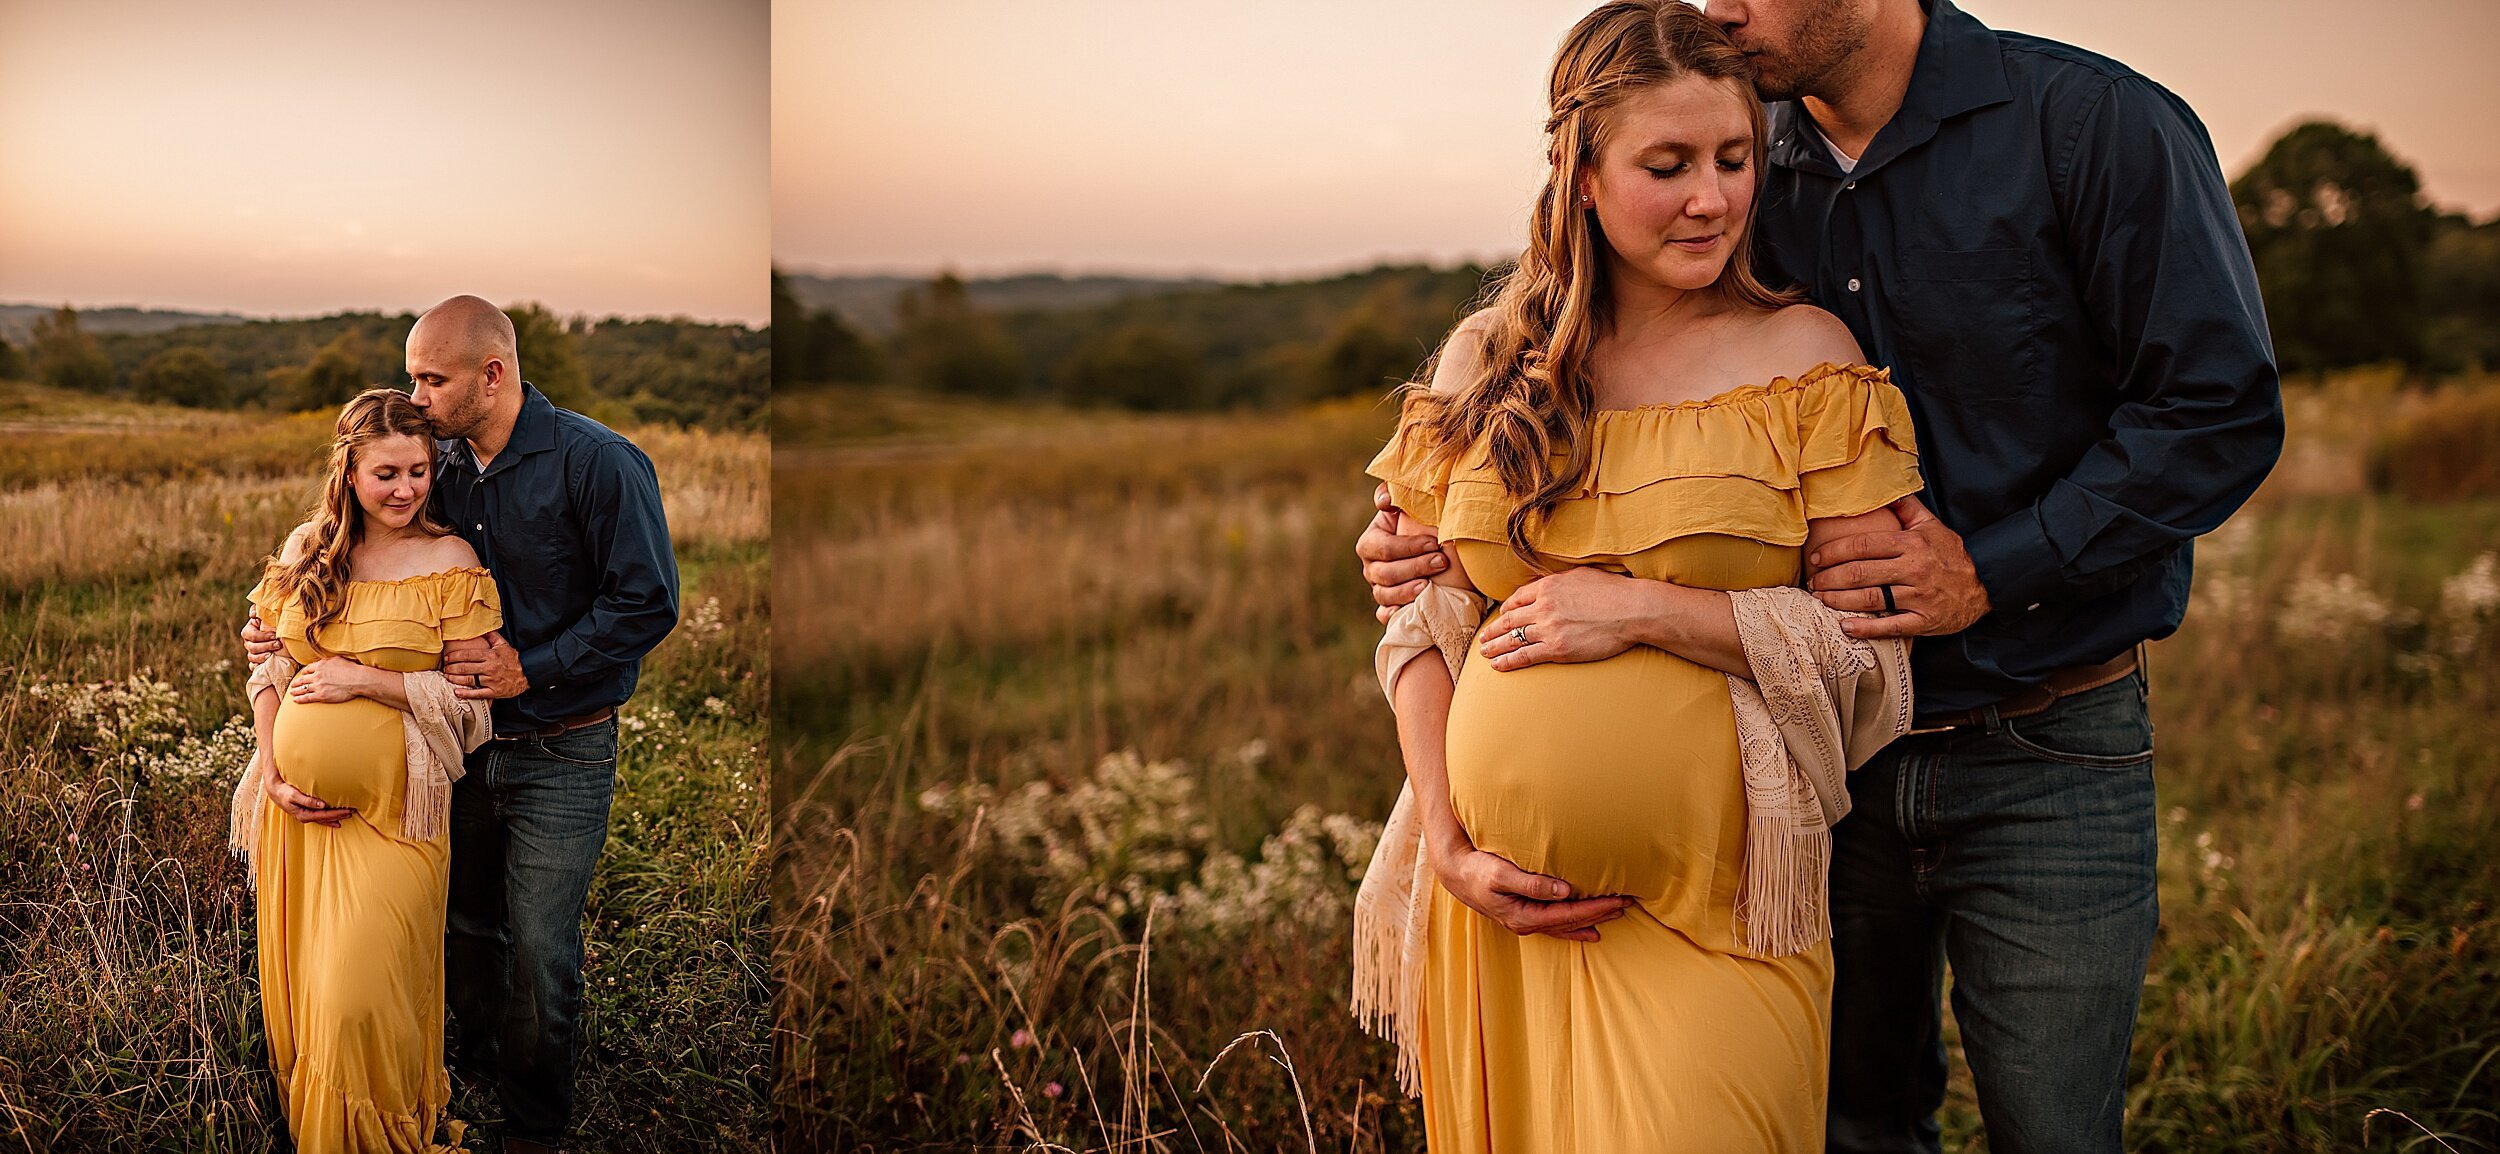 canton-ohio-family-frye-family-park-maternity-session-outdoor-sunset-fields-lauren-grayson-photography_0127.jpeg